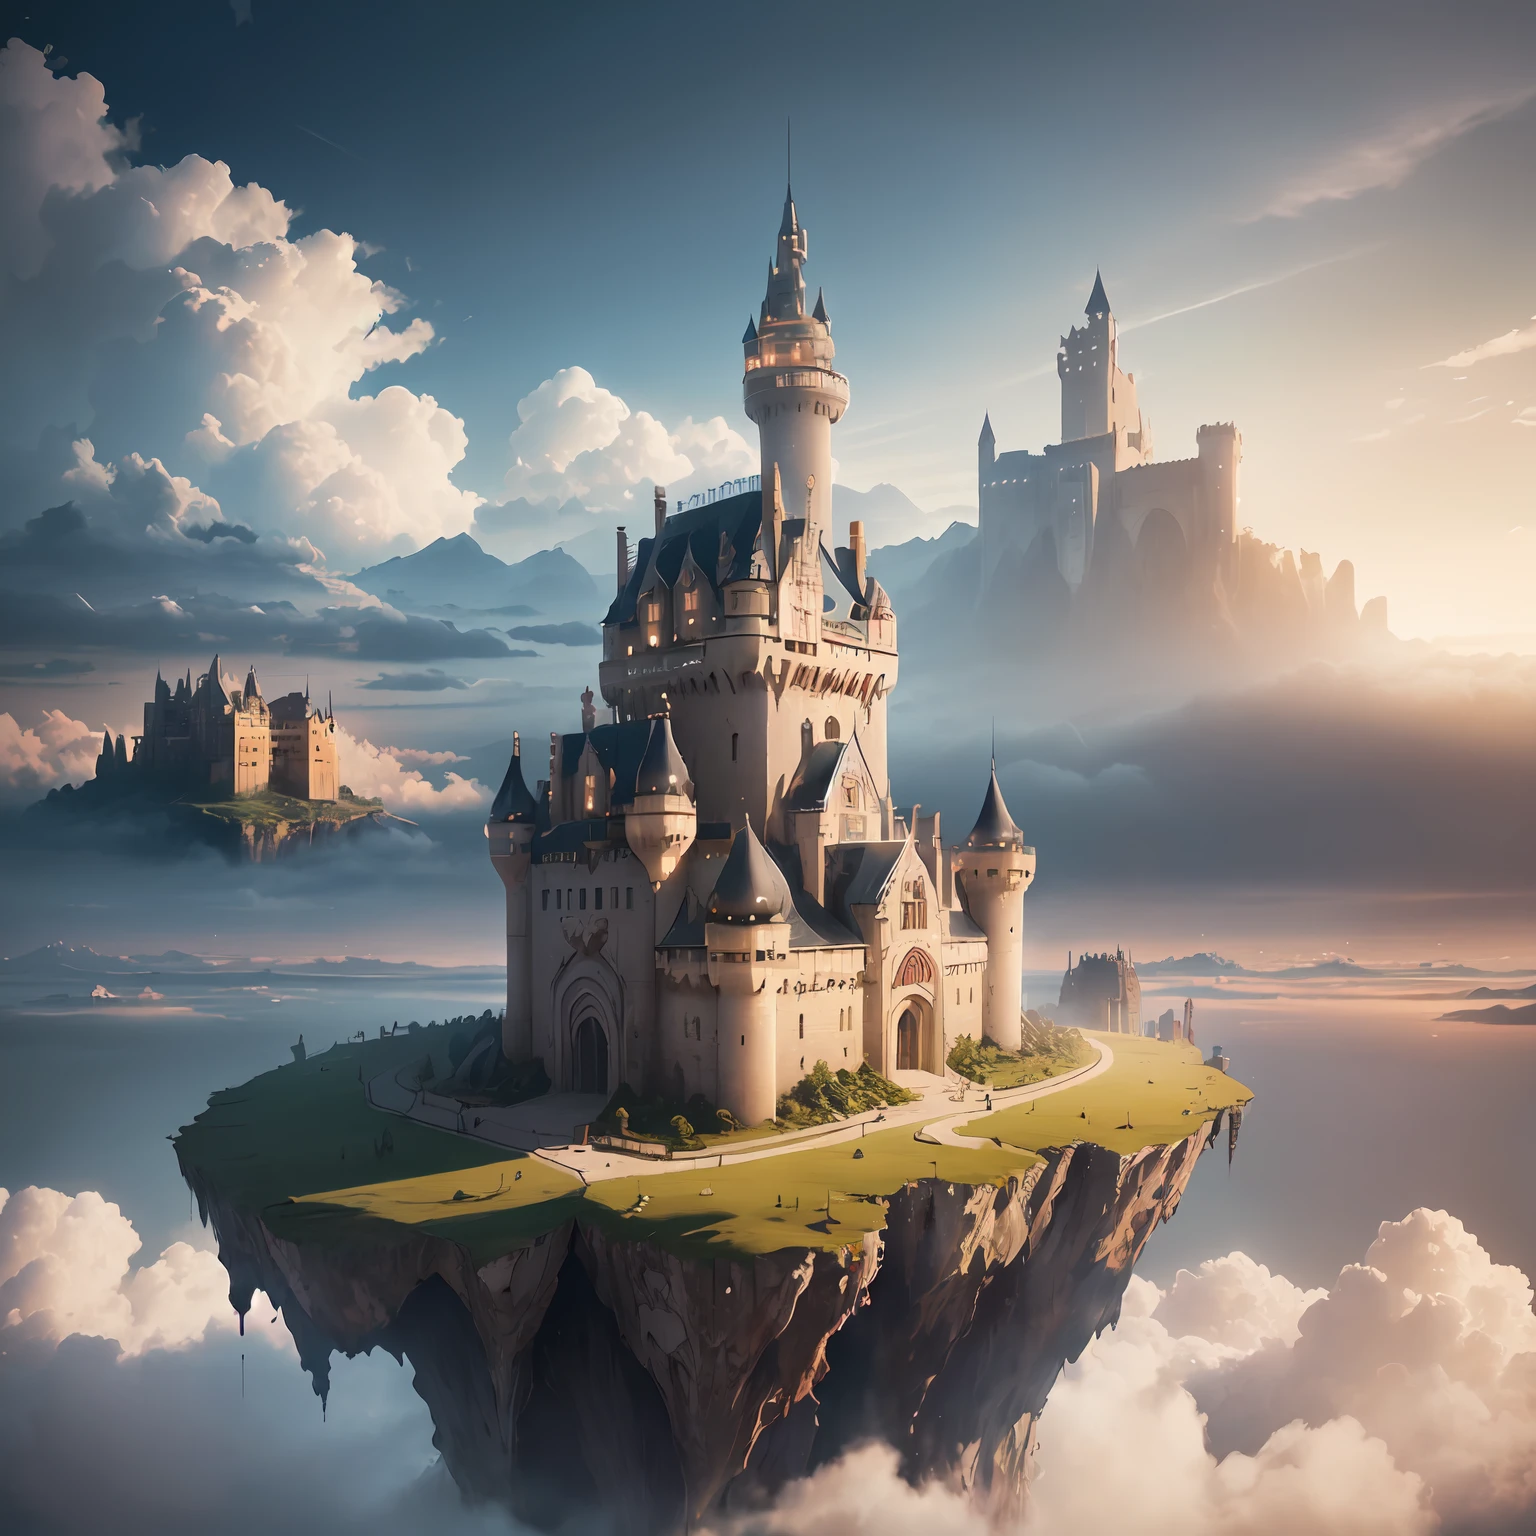 "there's an island floating in the sky among the 雲 with castle on it, 城はギアと機械部品でいっぱいです" 天空の城, 浮かぶ城, 雲, (映画のような, 8k, 傑作, 素晴らしい背景, ダイナミックライティング, ズームアウトする, 非常に超高精細, 魅惑的な風景の景色)